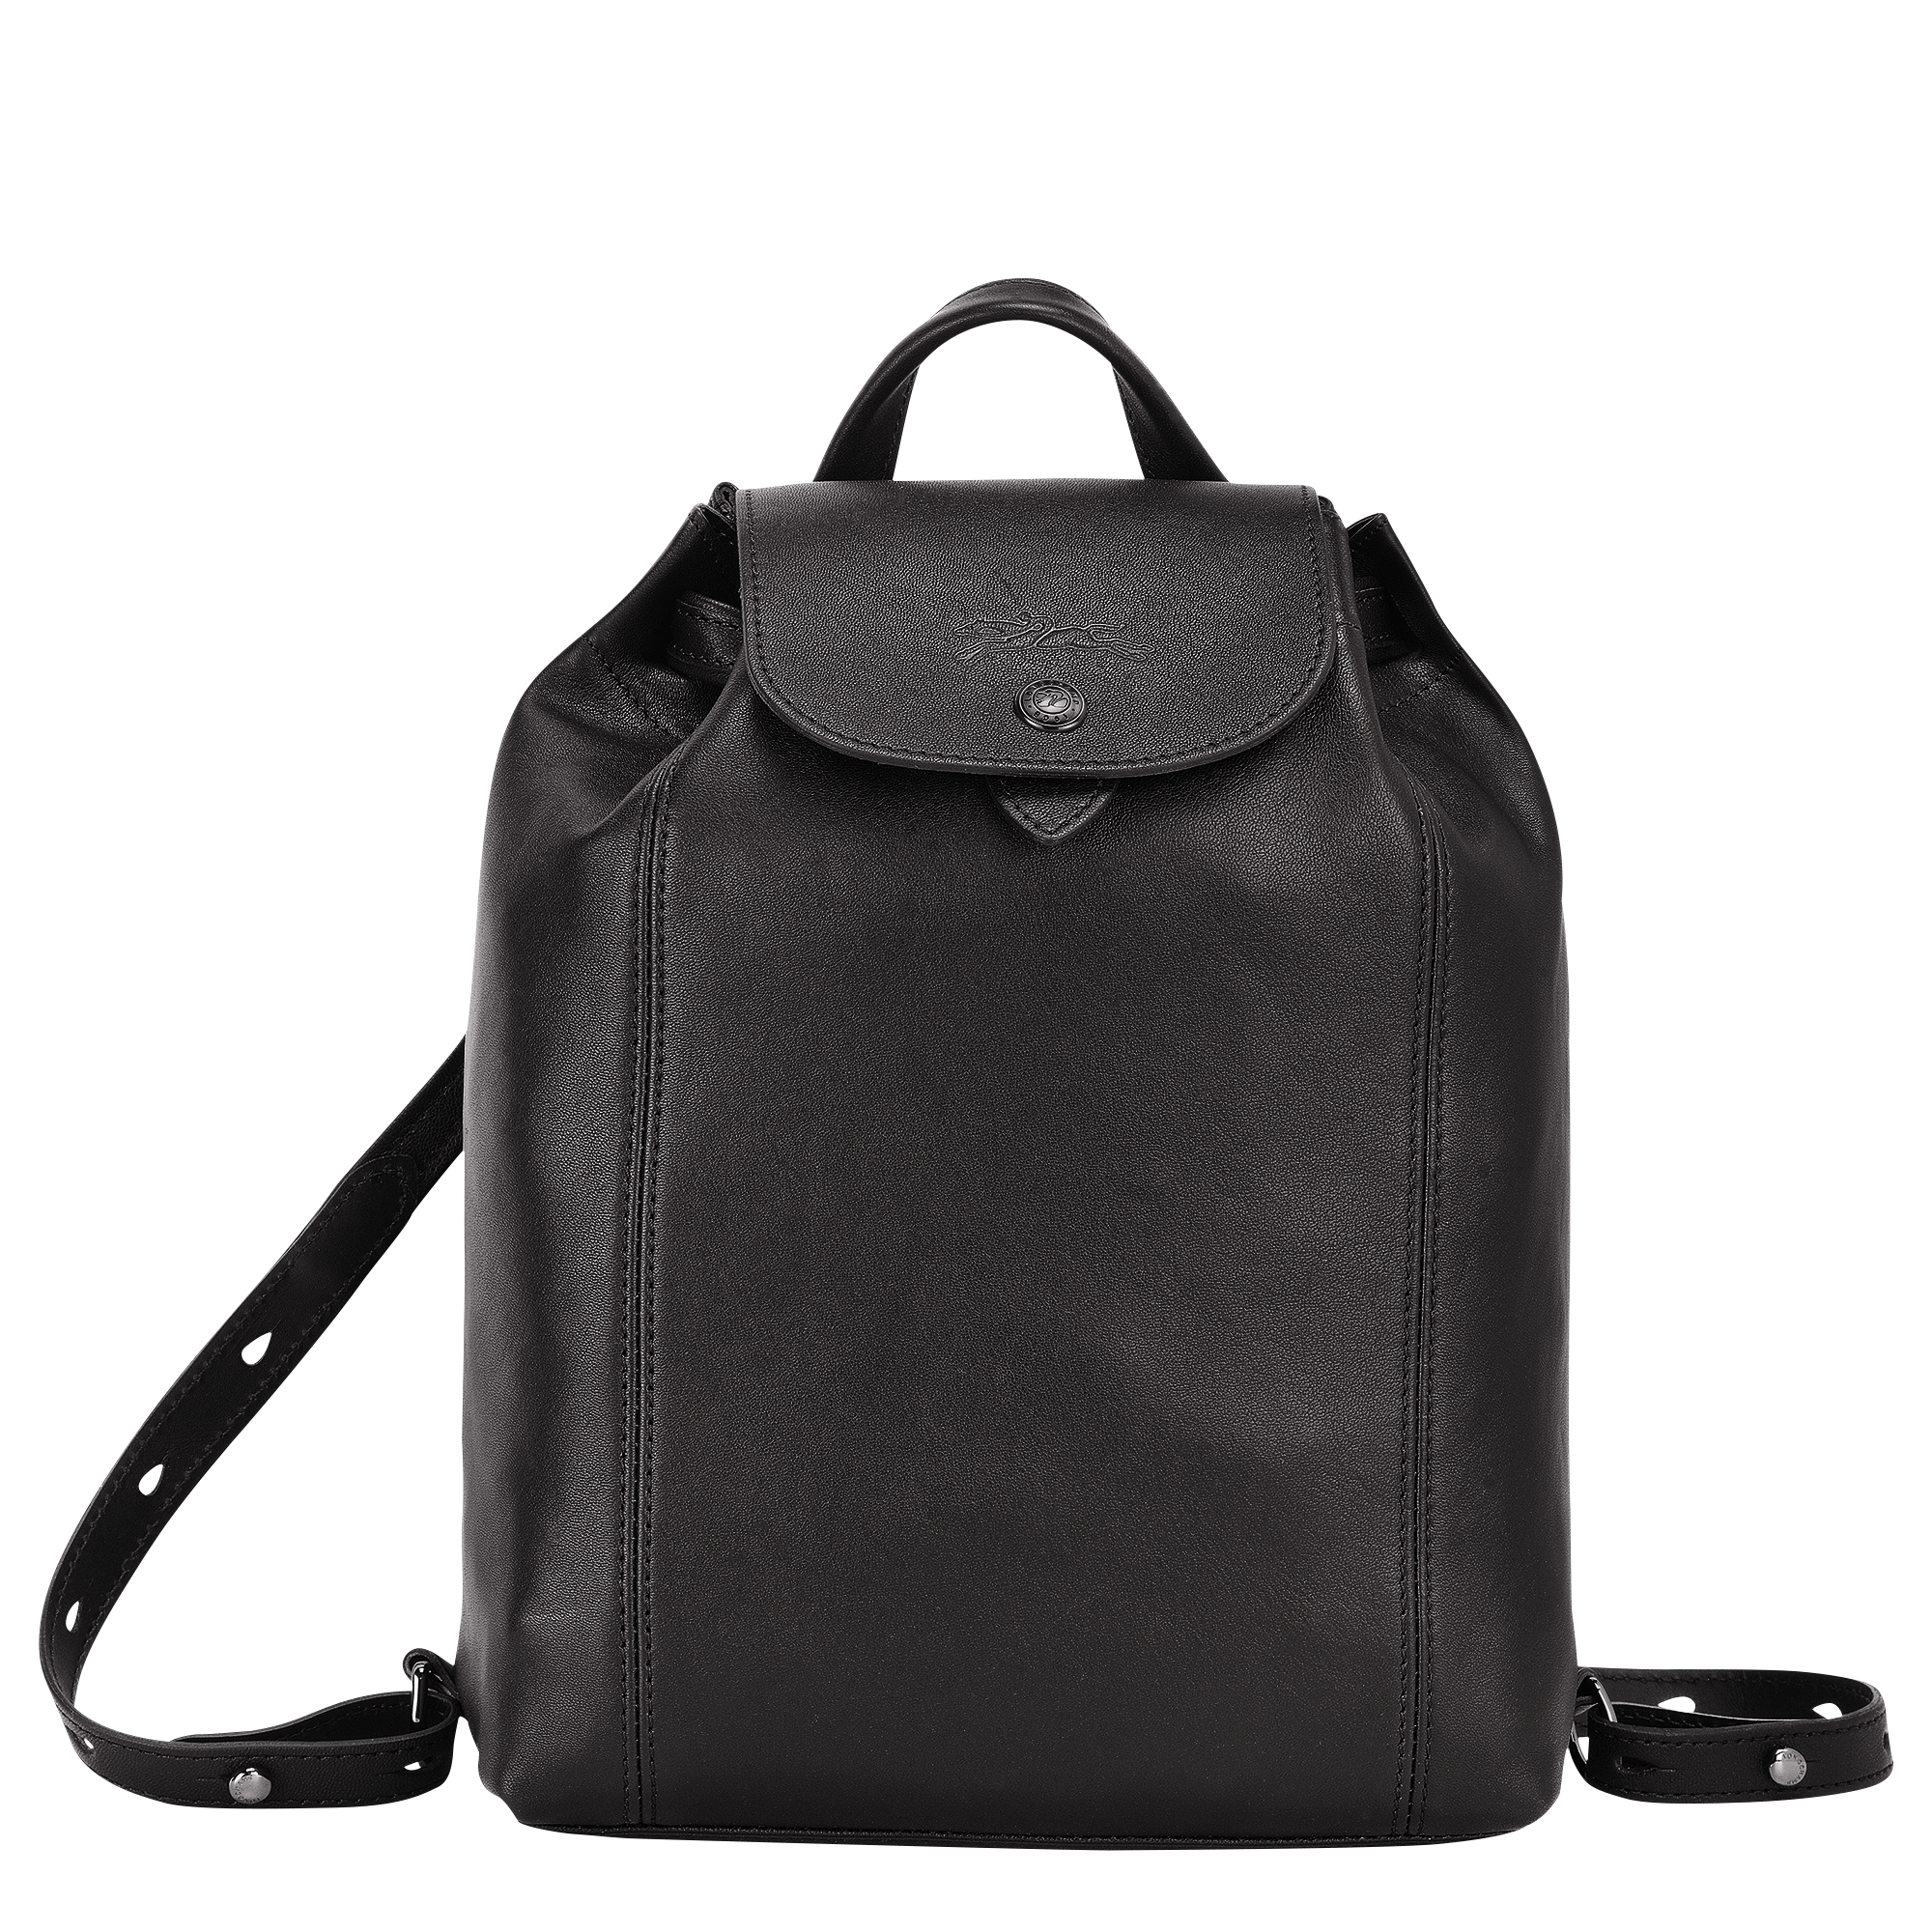 Backpack Le Pliage Cuir Black 